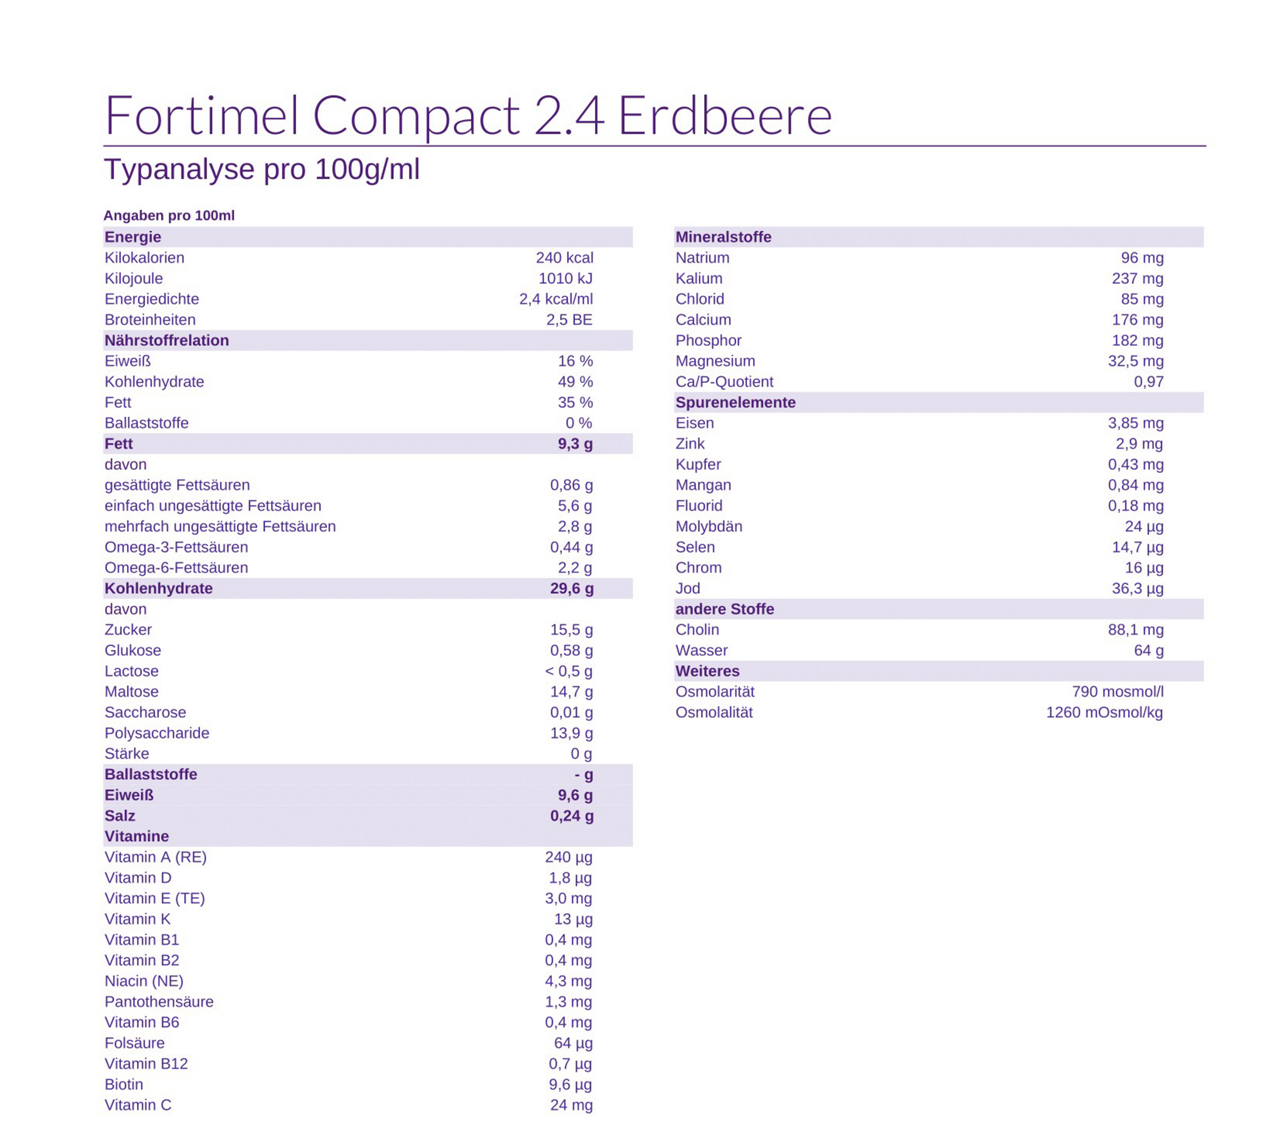 Fortimel Compact 2.4 Erdbeergeschmack Nährwerte